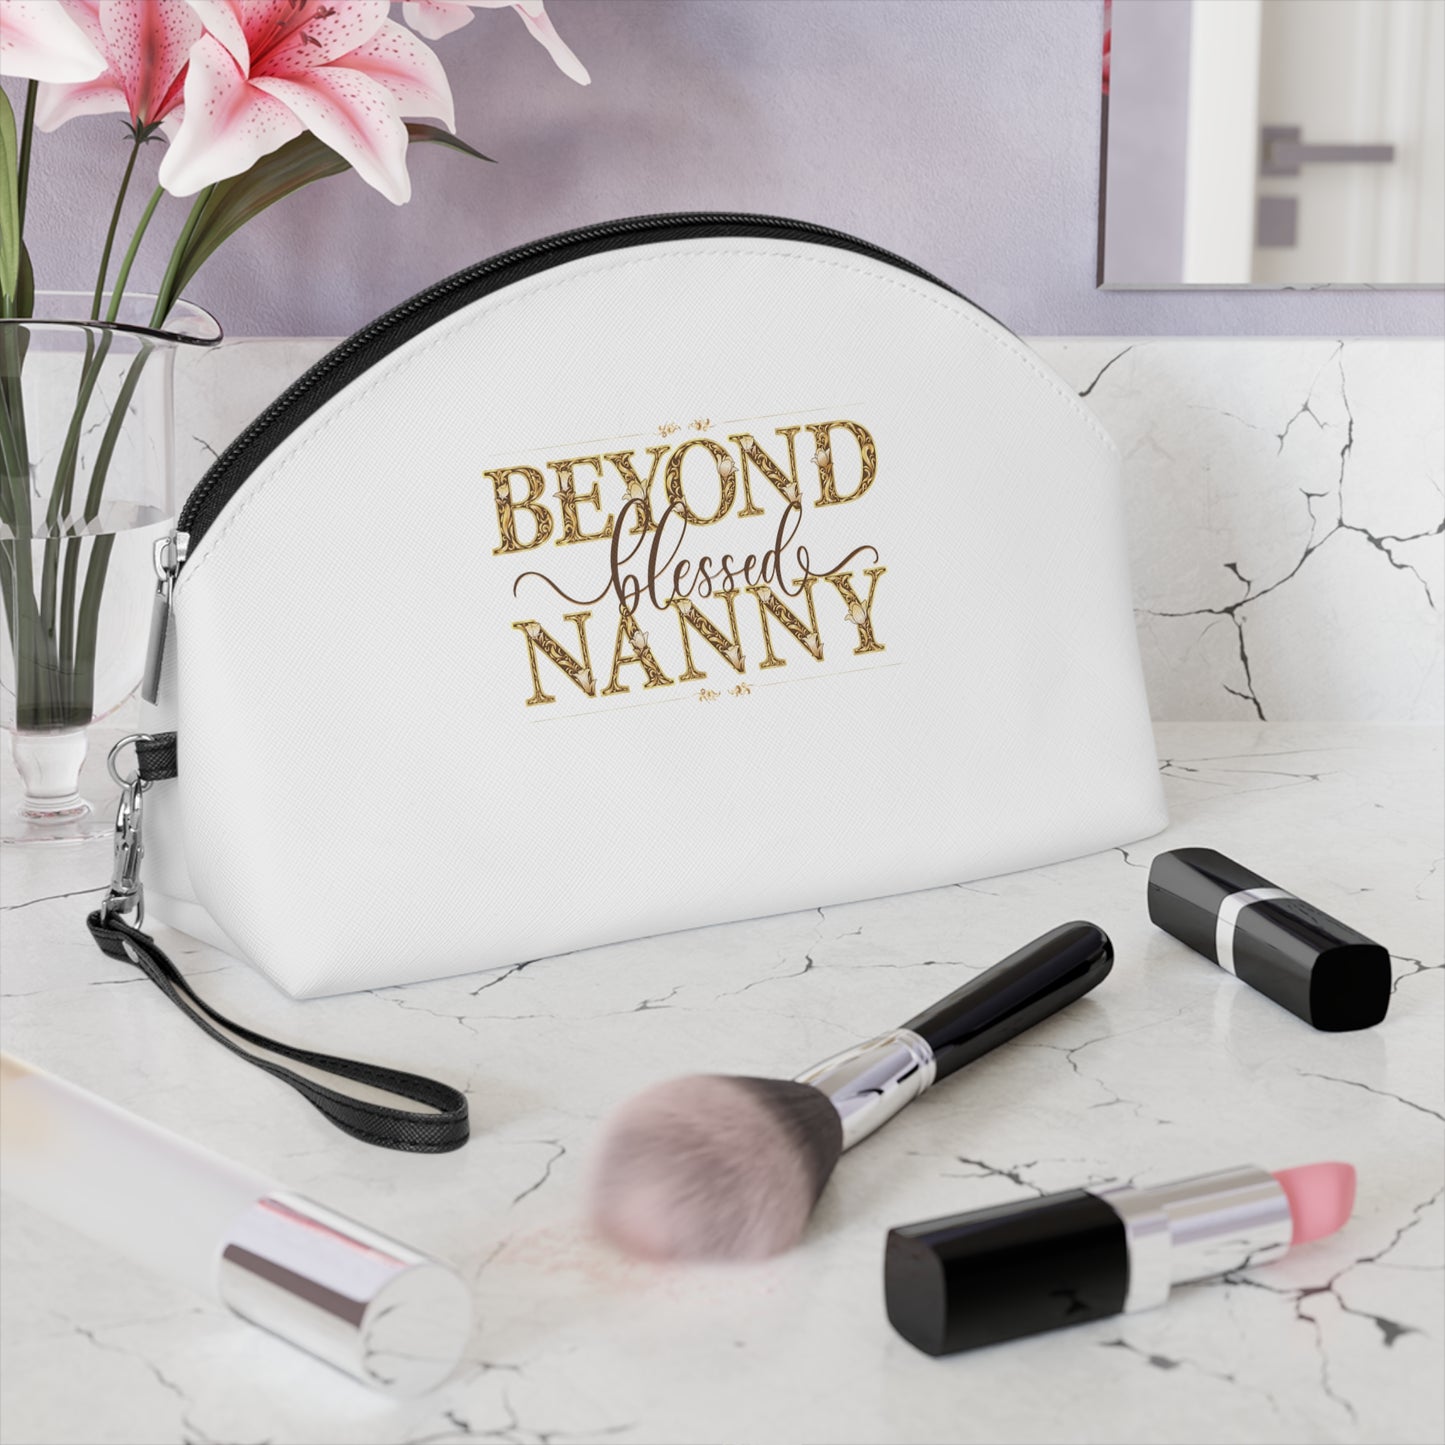 Beyond Blessed Nanny - Brown - Makeup Bag